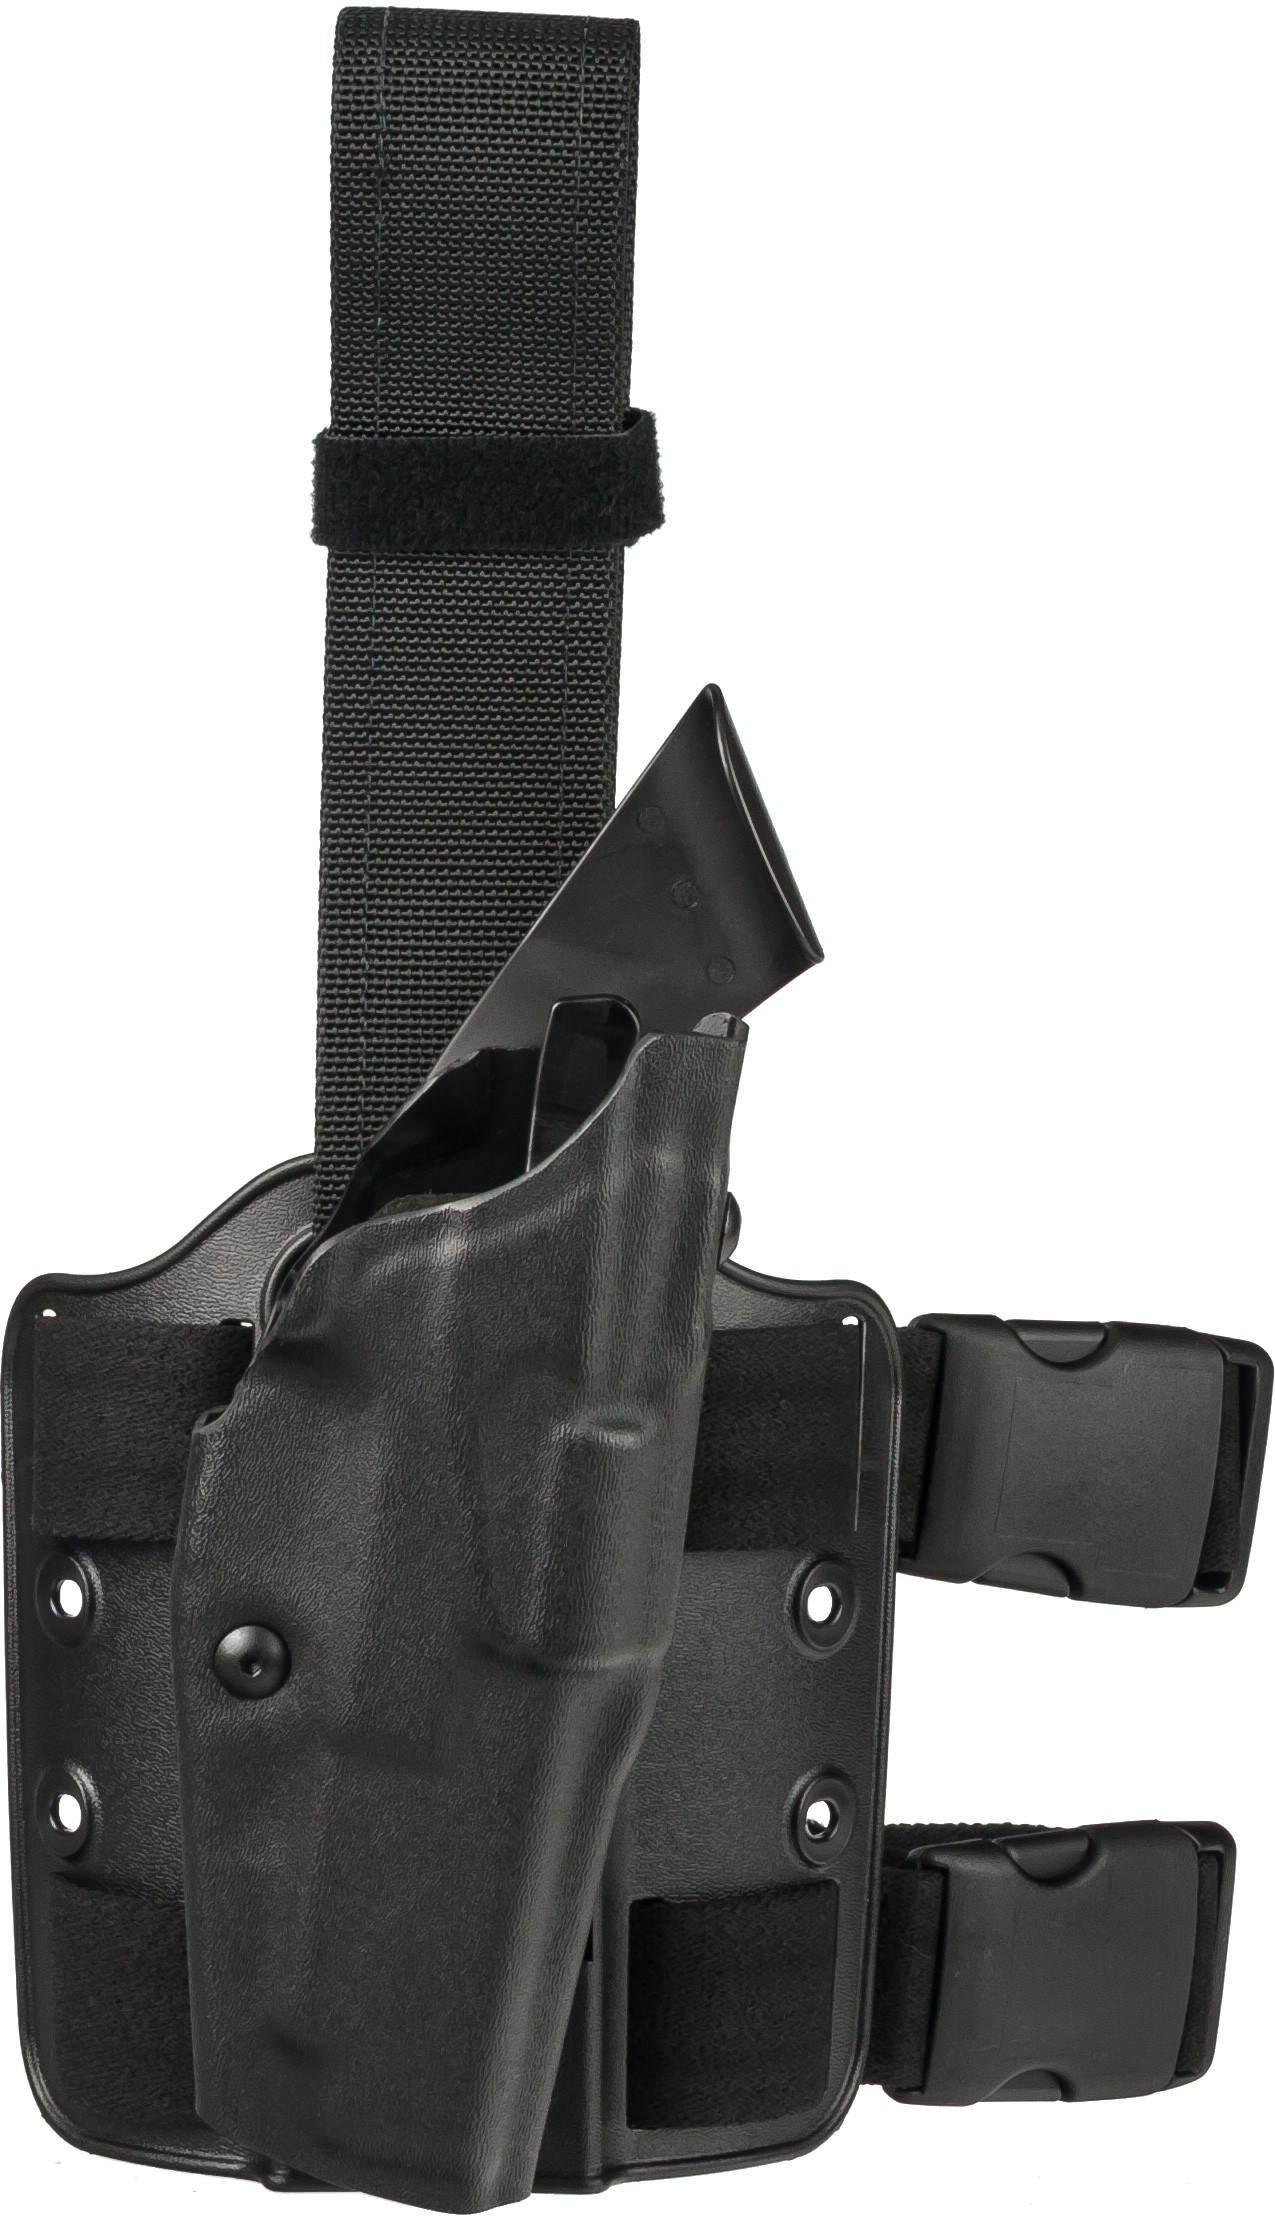 Safariland Model 6354 ALS Drop-Leg Holster for Glock 19/23/32